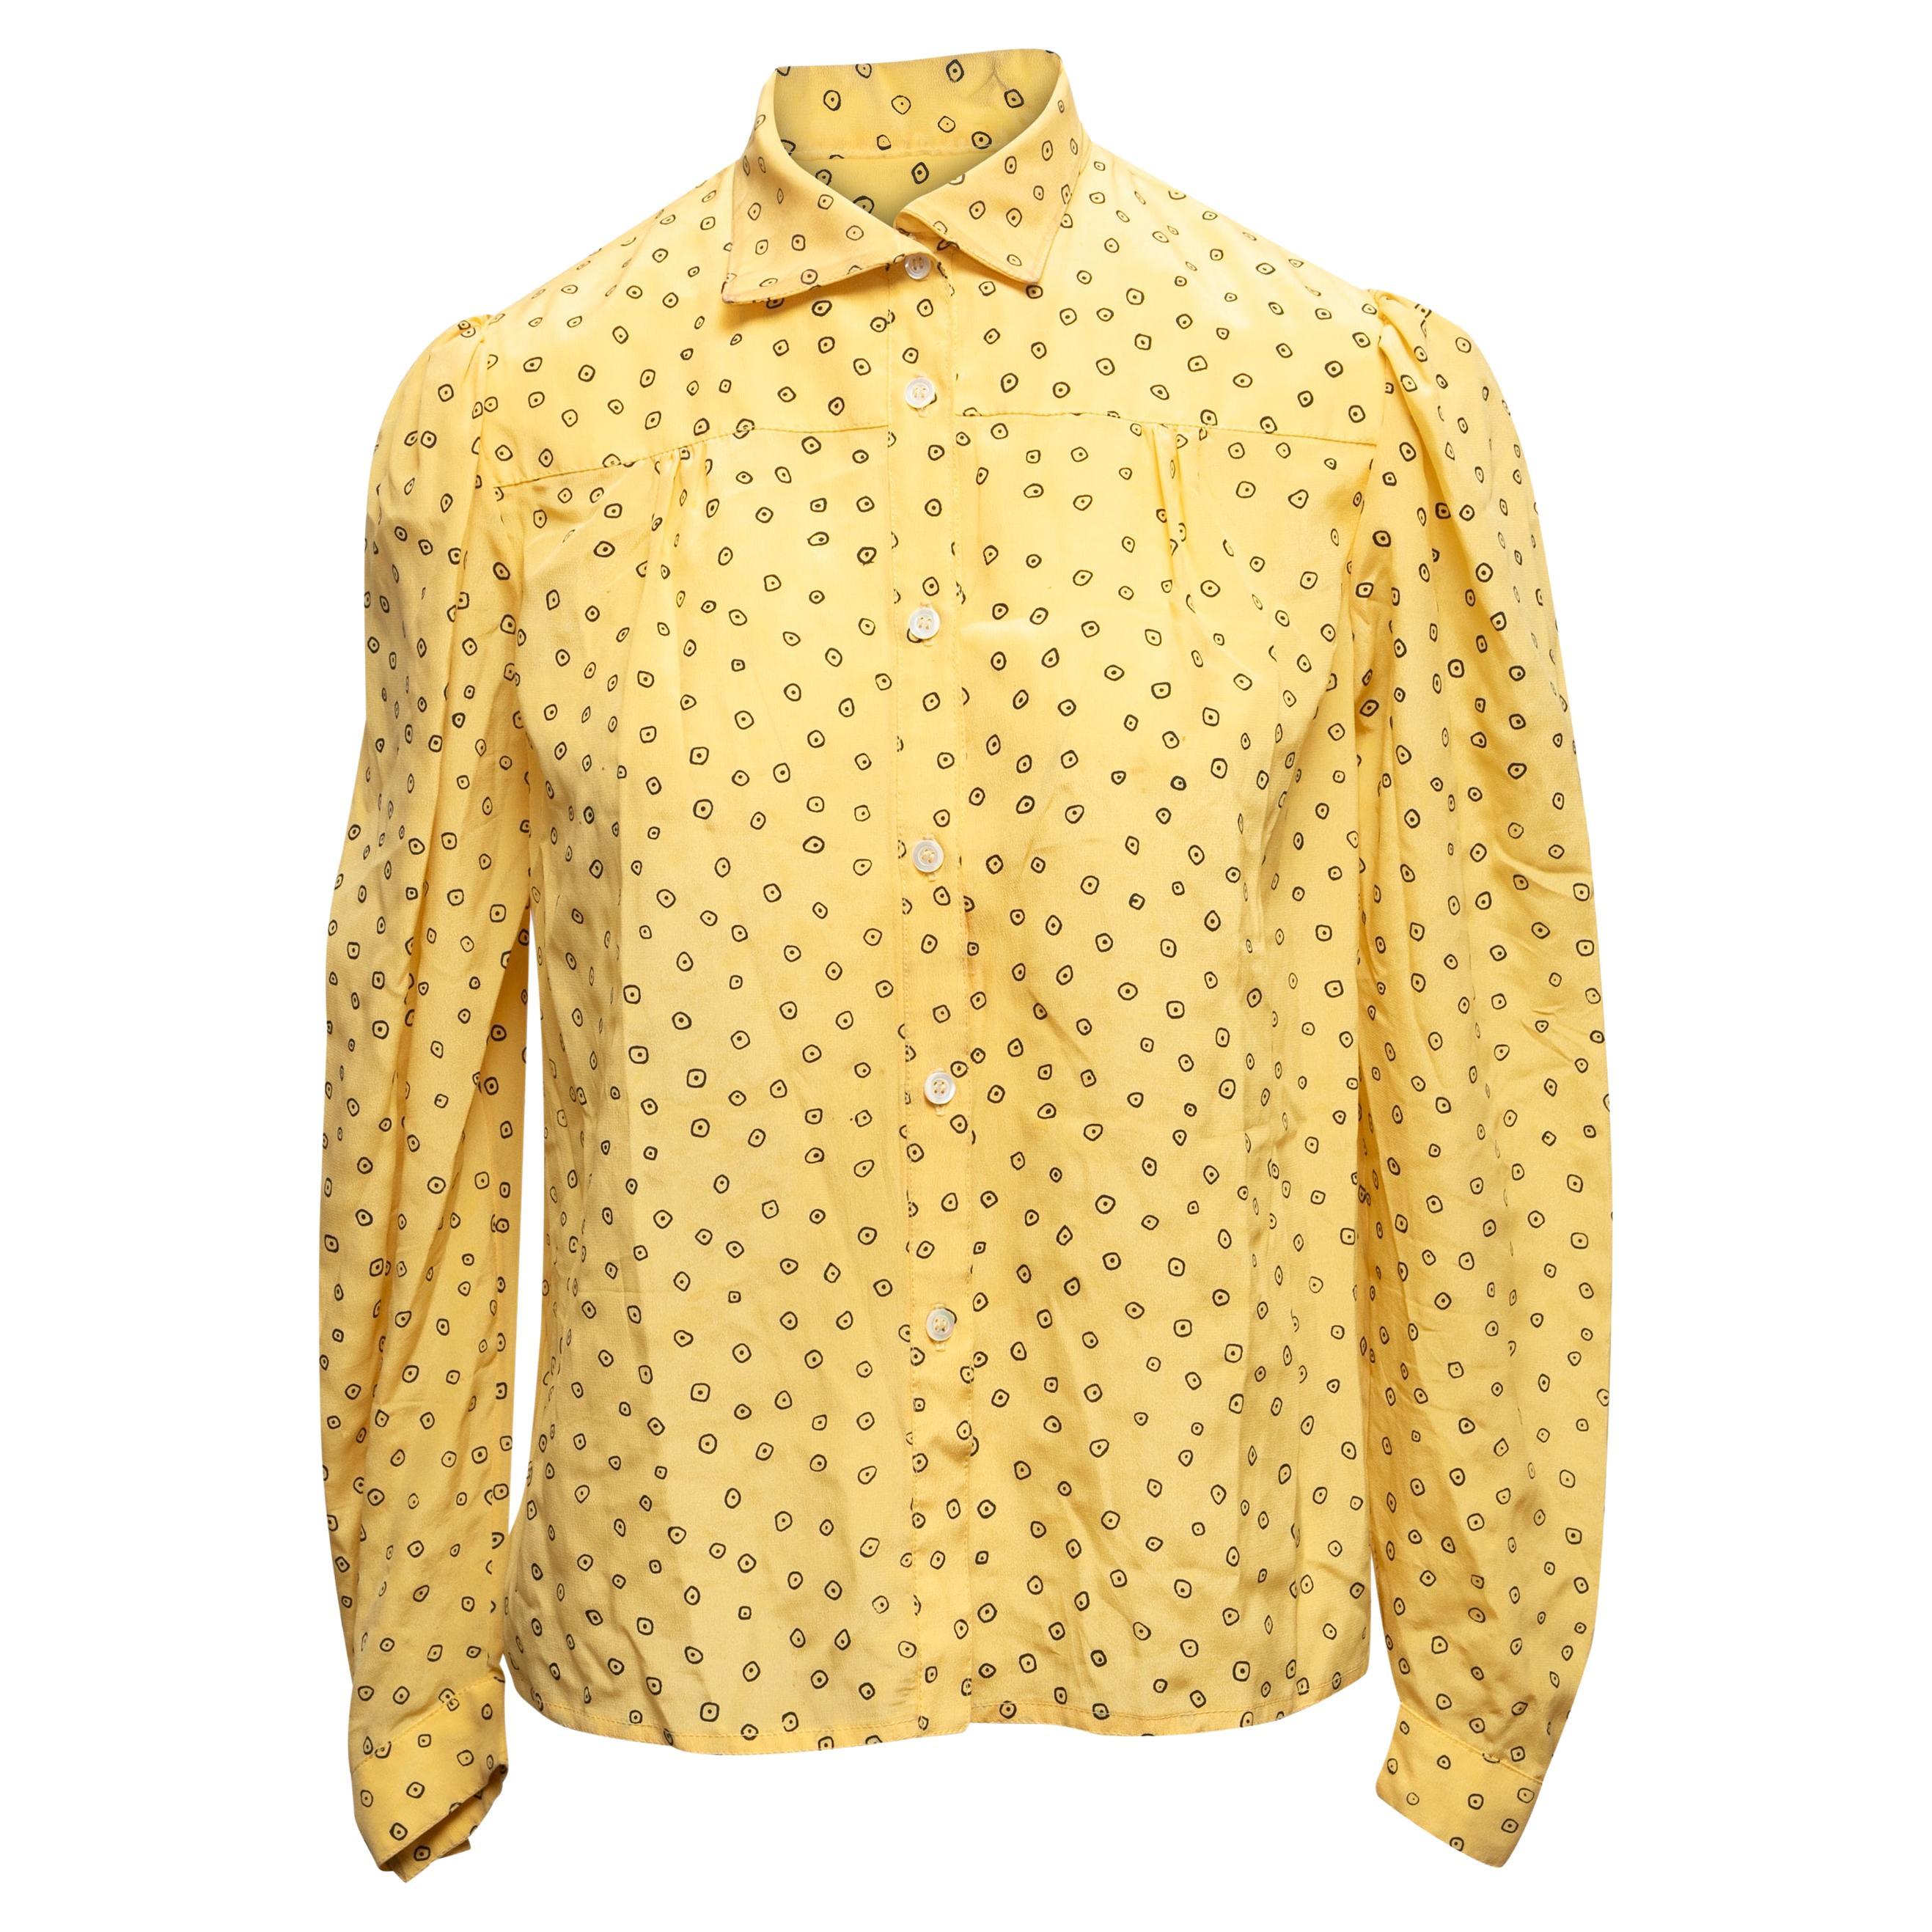 Vintage Yellow & Black Jan Vanvelden Printed Silk Blouse Size US S/M For Sale